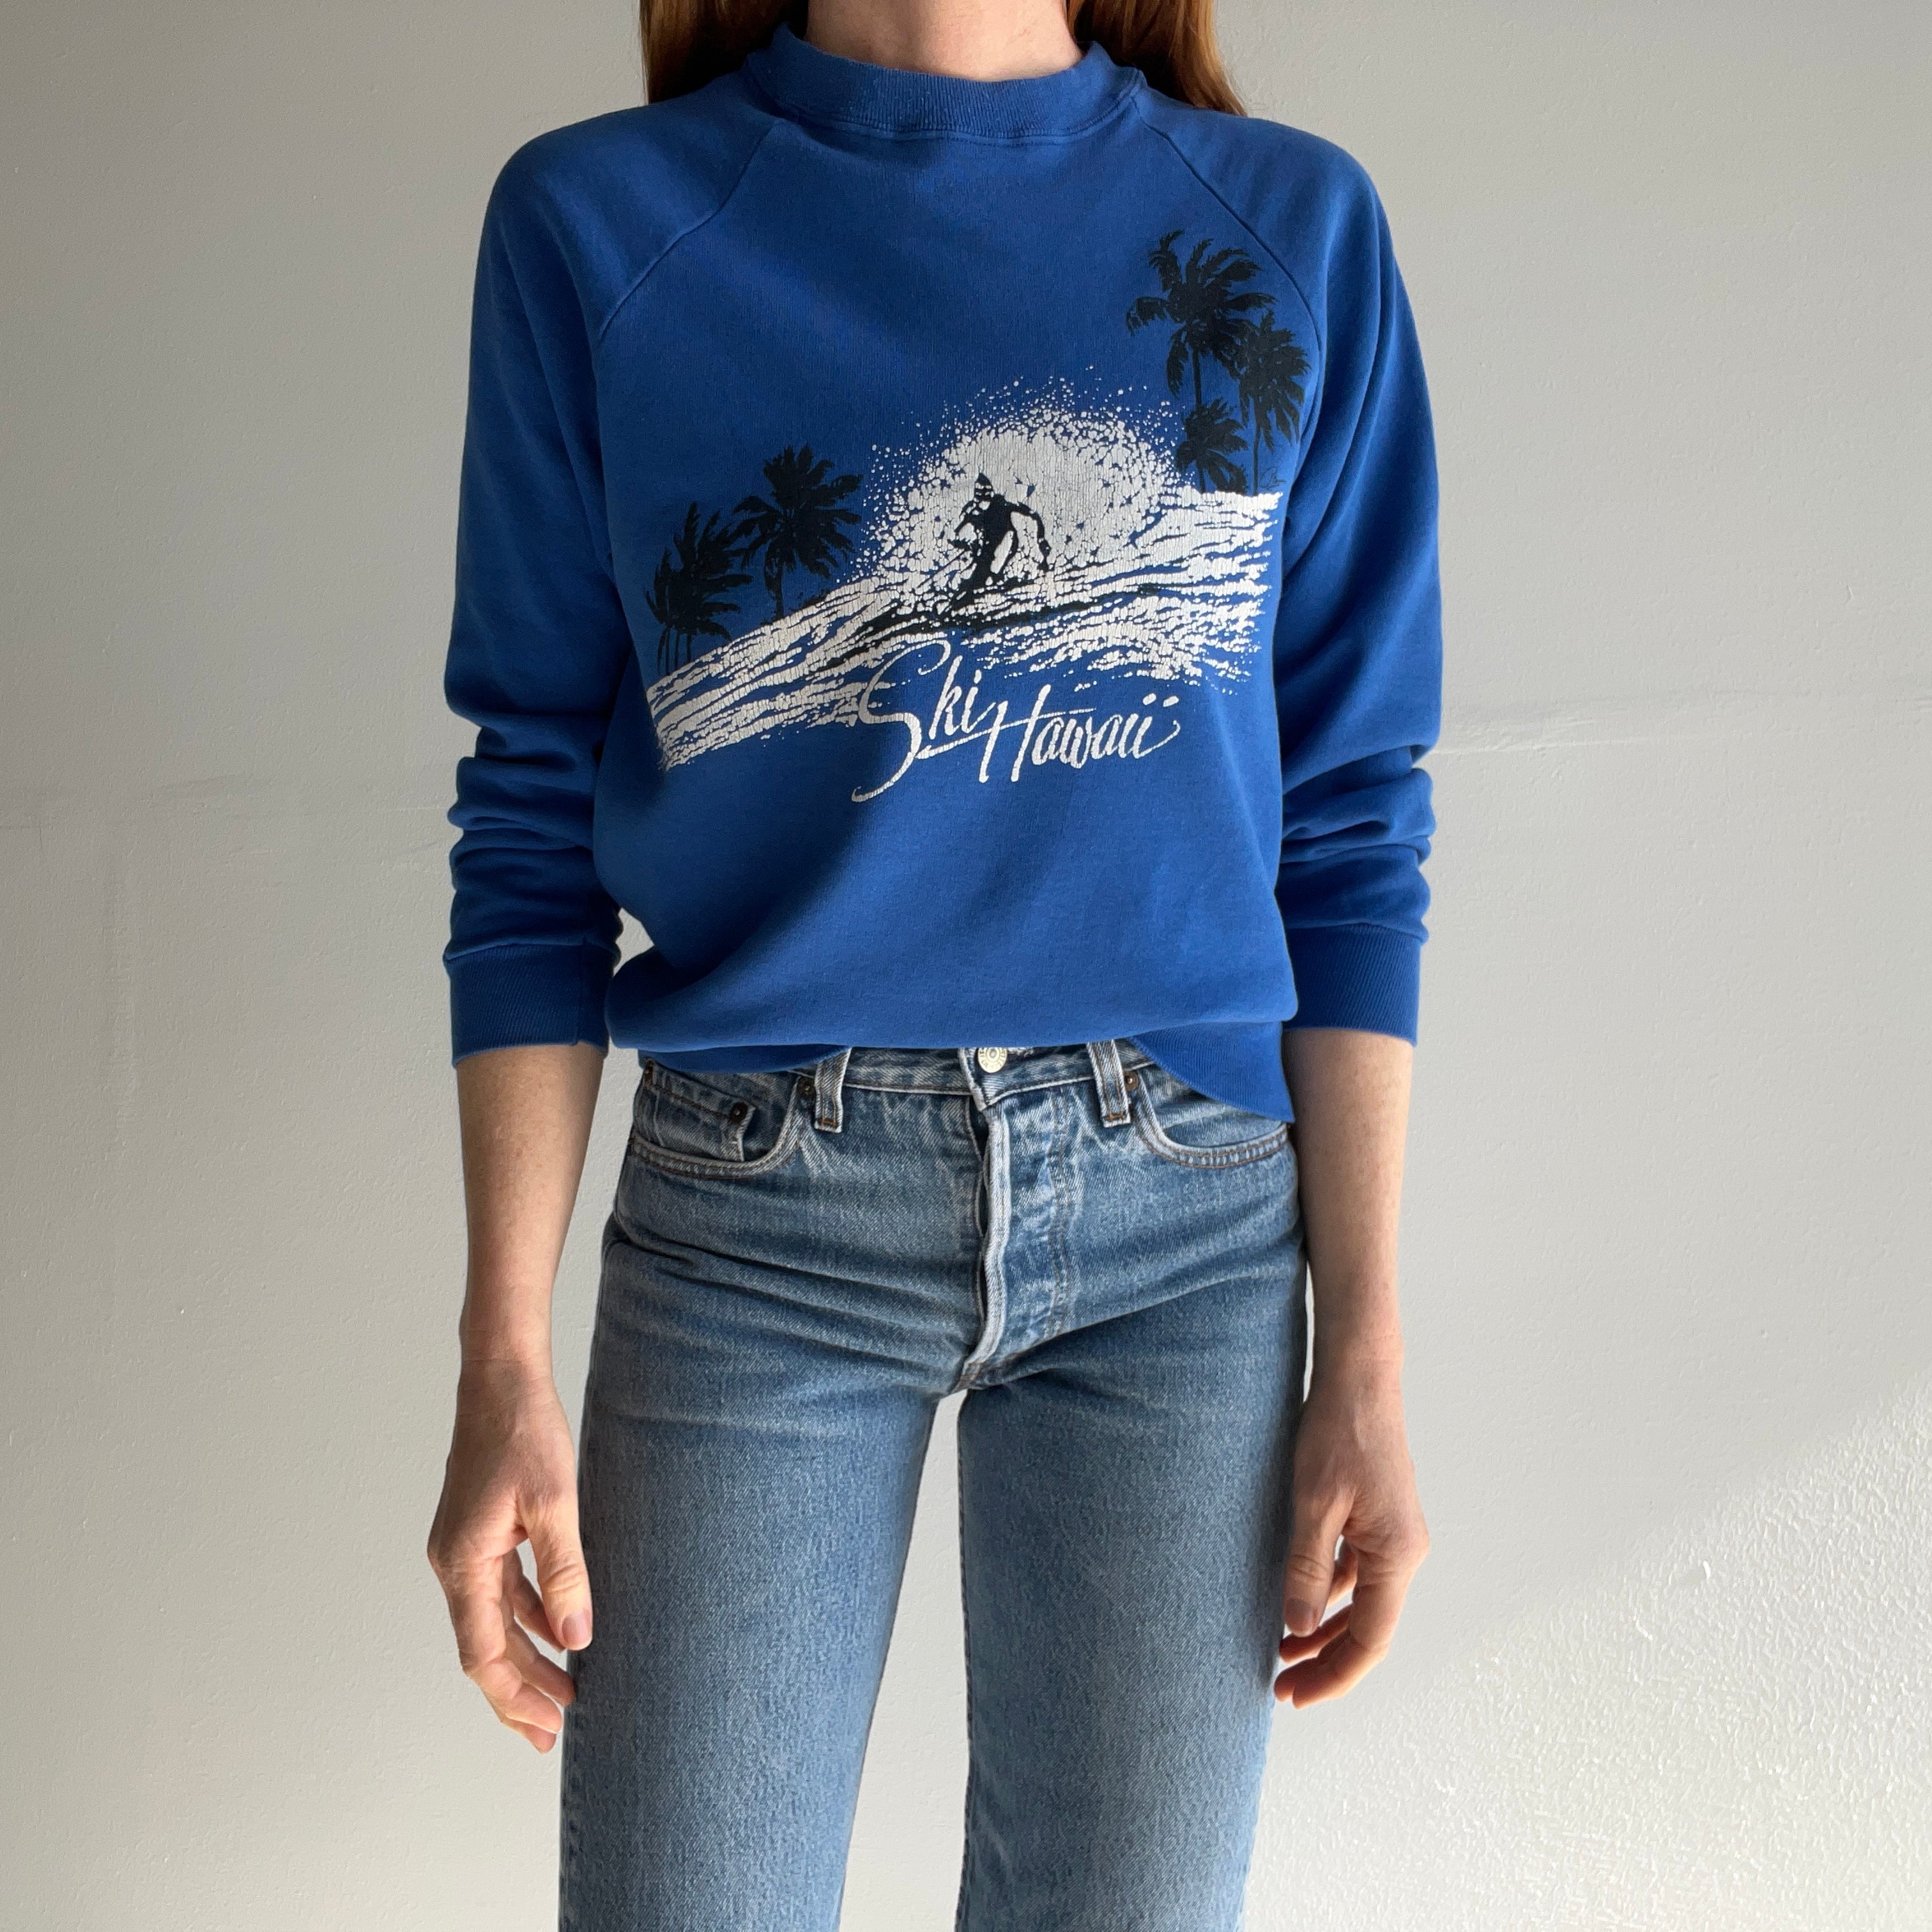 1980s Ski Hawaii Sweatshirt !!!